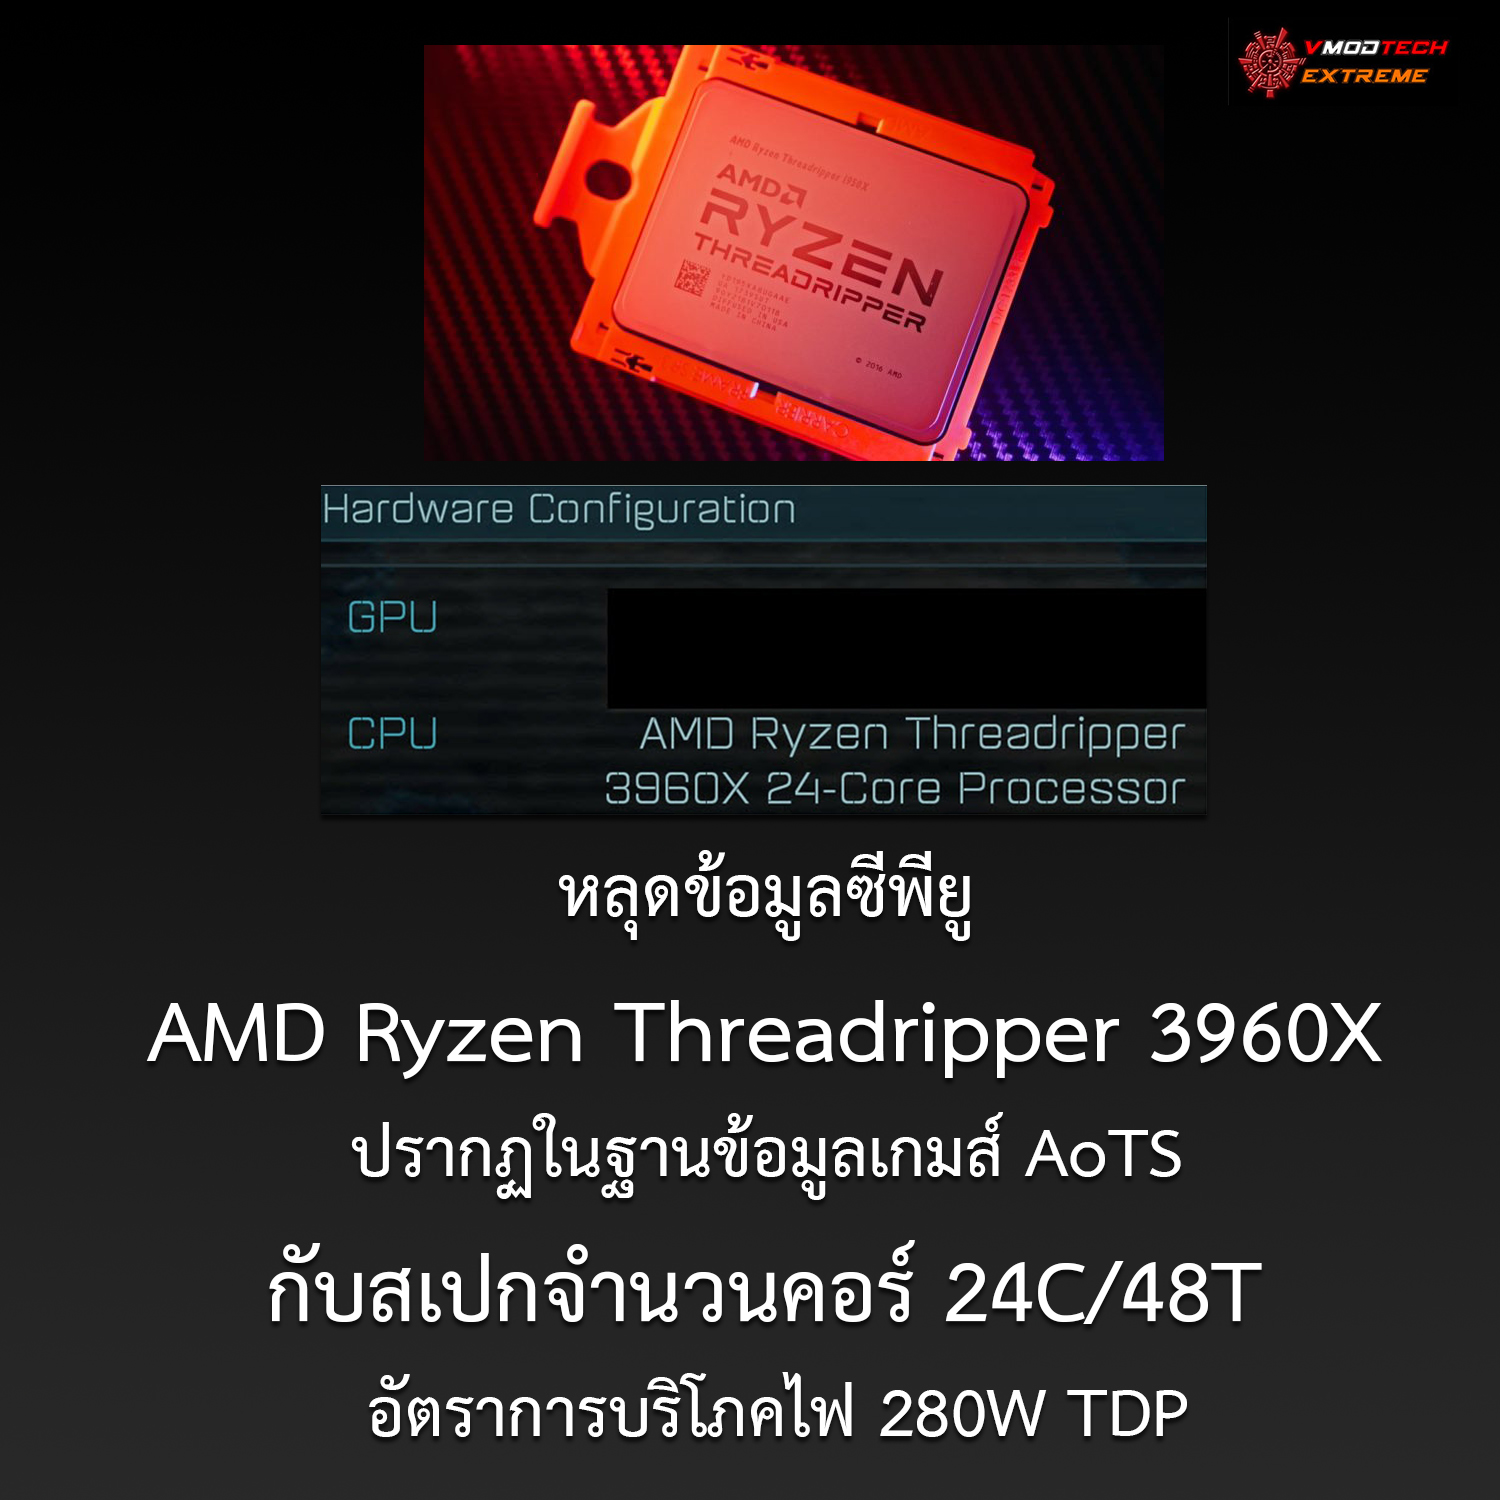 amd ryzen threadripper 3960x หลุดข้อมูลซีพียู AMD Ryzen Threadripper 3960X ปรากฏในฐานข้อมูลเกมส์ AoTS กับสเปกจำนวนคอร์ 24C/48T อัตราการบริโภคไฟ 280W TDP